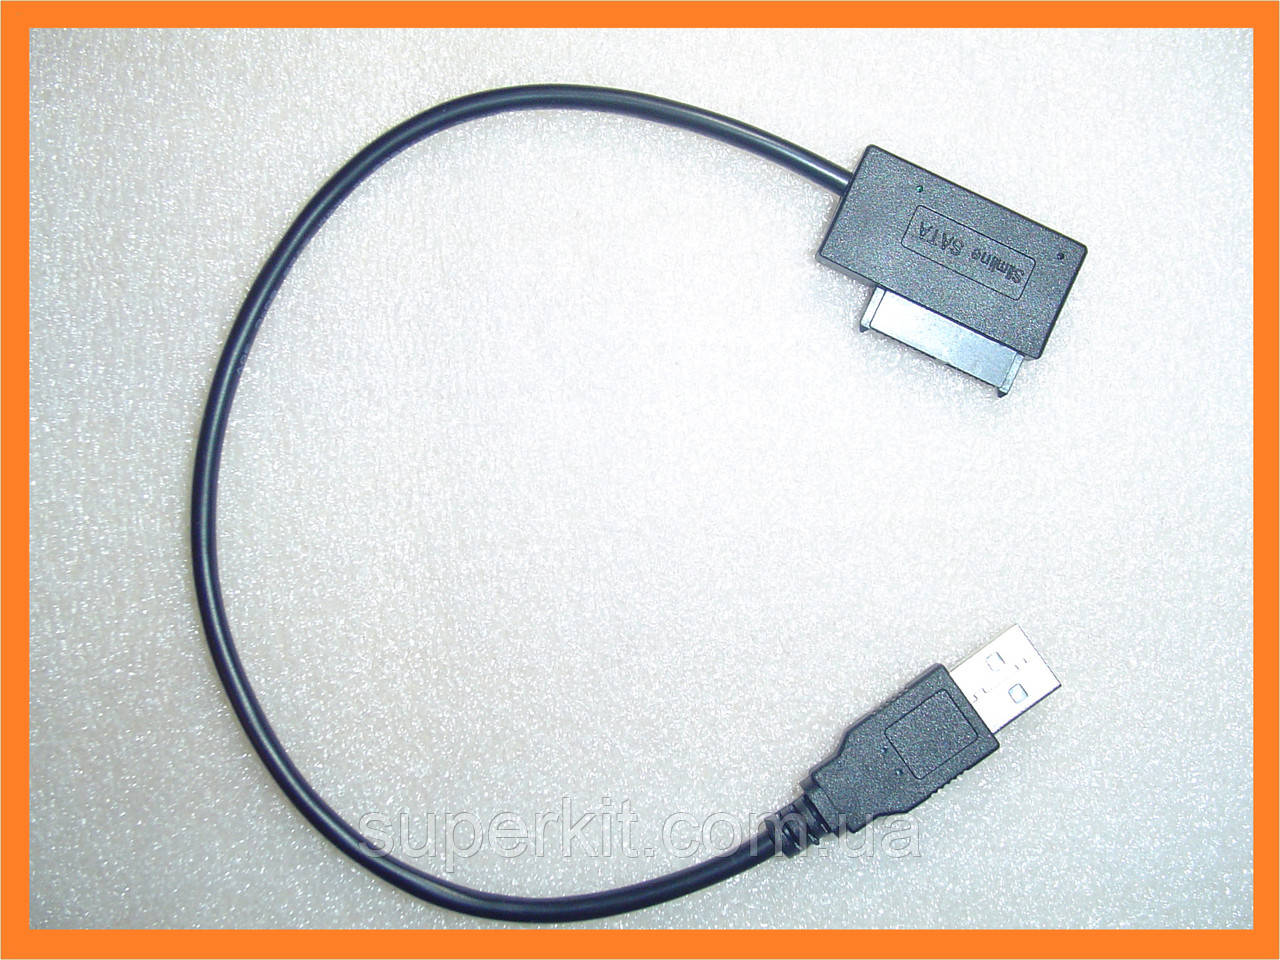  USB 2.0 -> Sata CD DVD привод ноутбука: продажа, цена в .